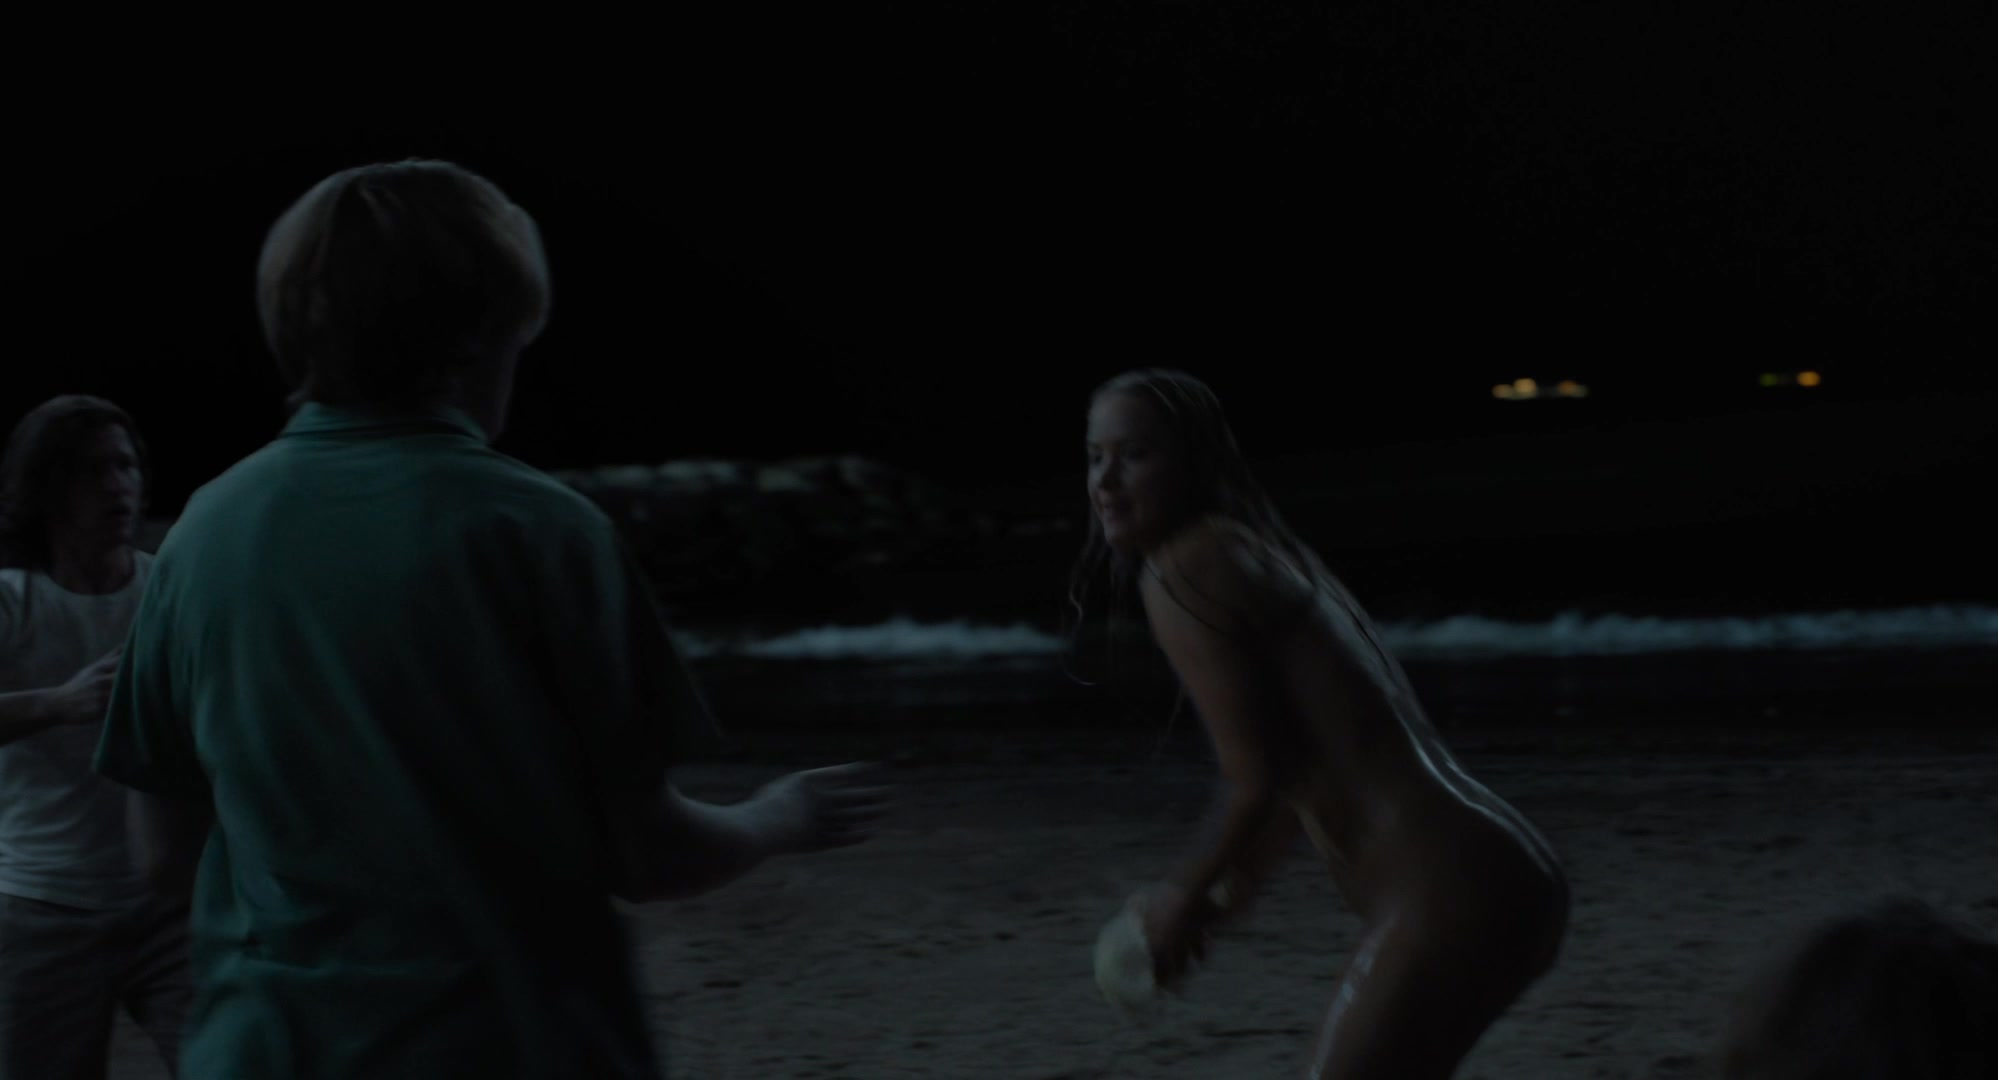 Jennifer lawerence nude beach scene